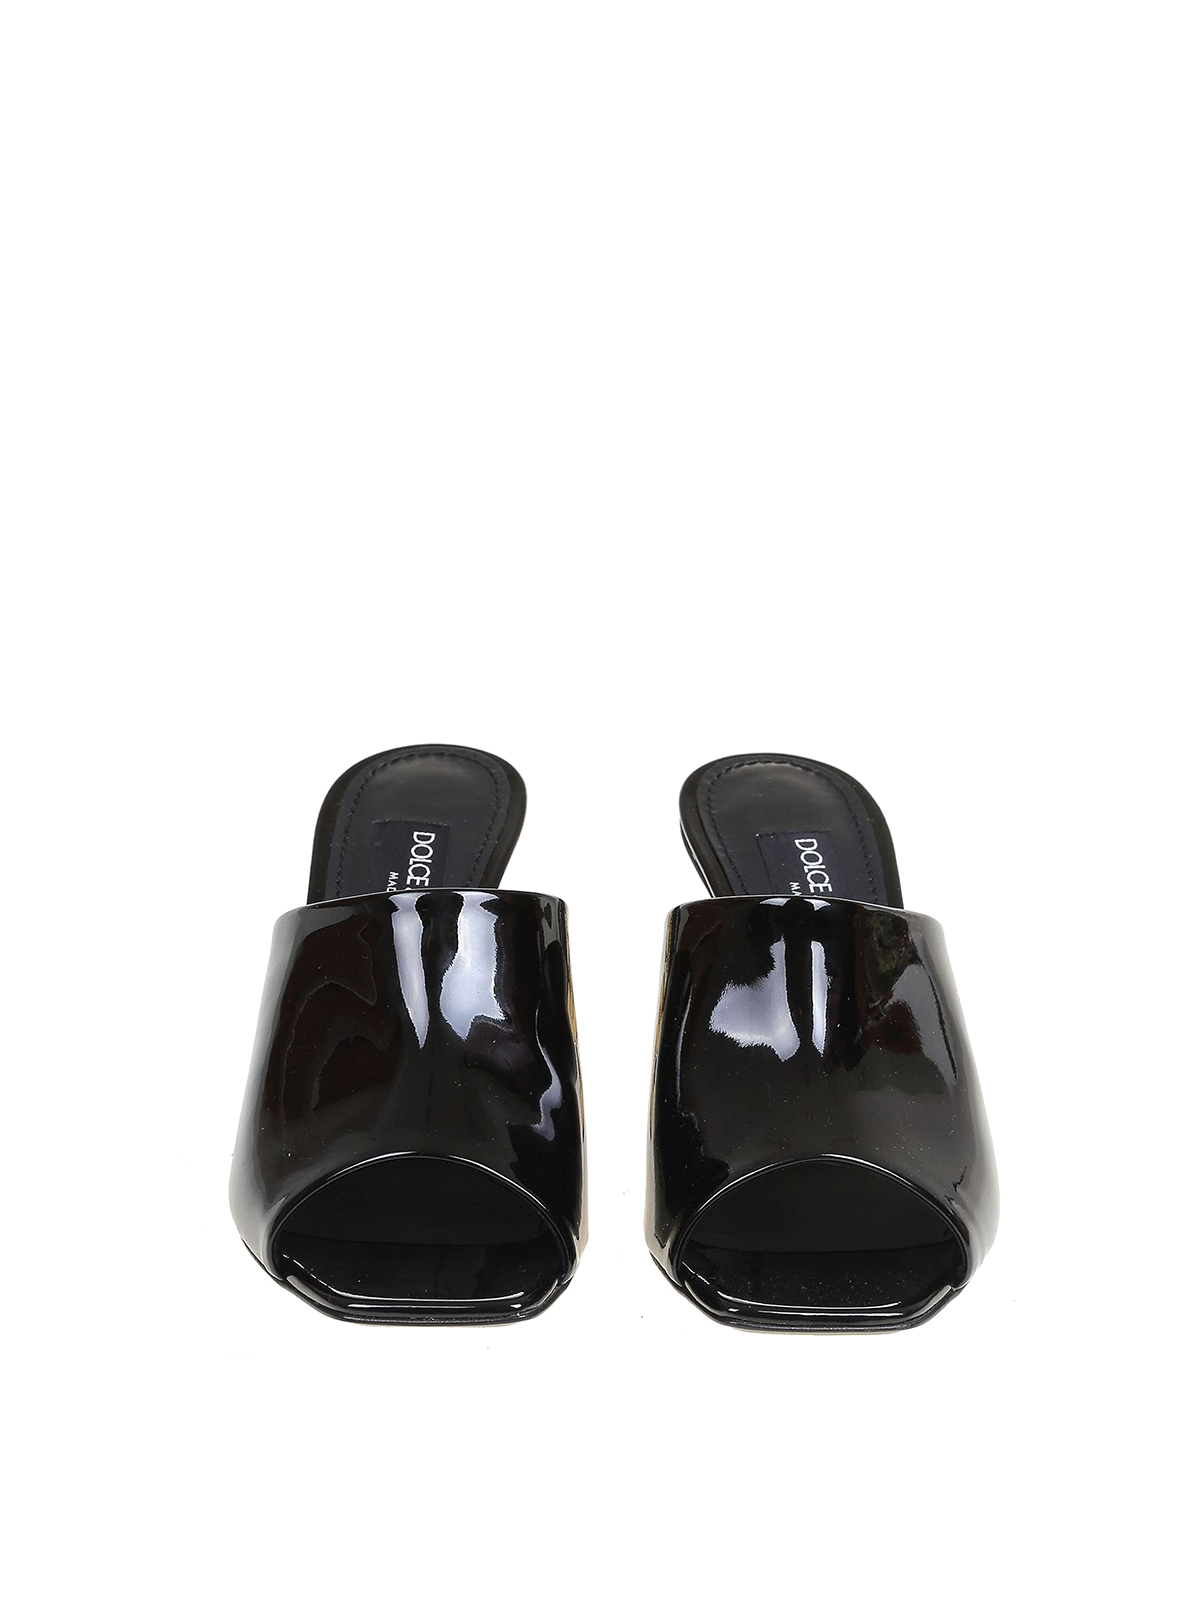 Mules shoes Dolce & Gabbana - Keira mules - CR1176A147180999 | iKRIX.com